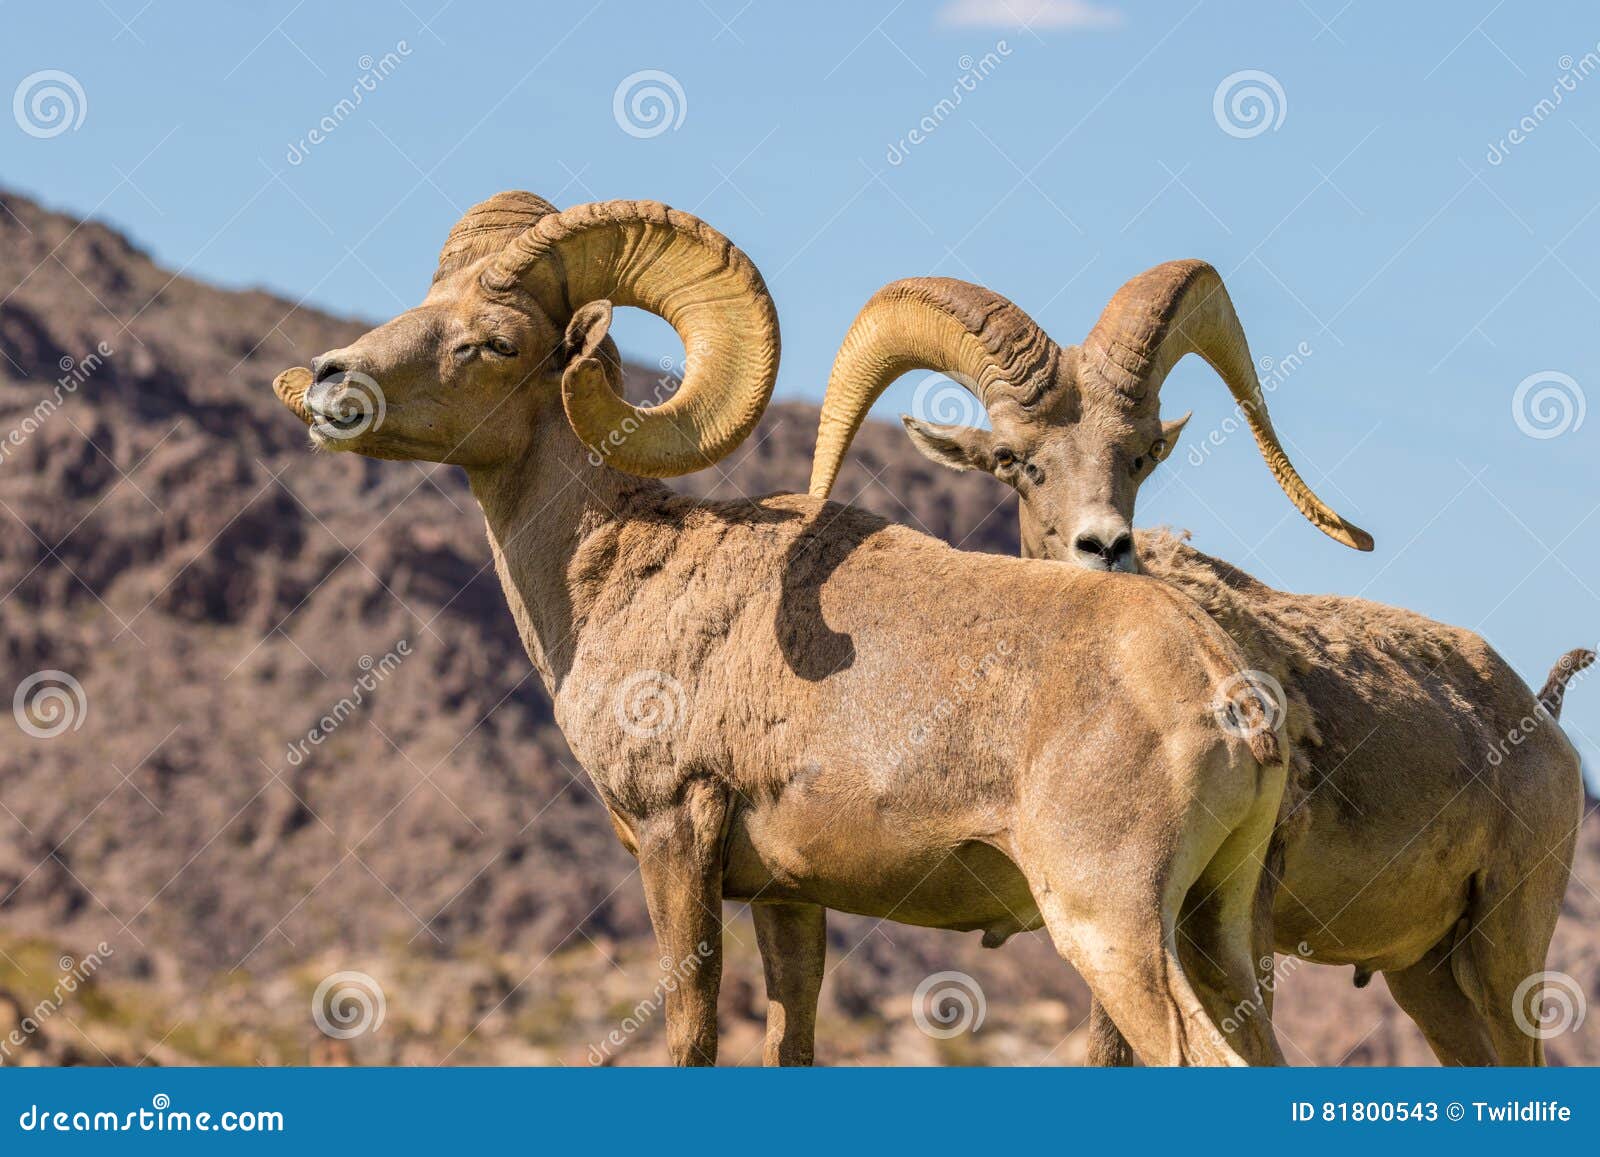 desert bighorn sheep rams